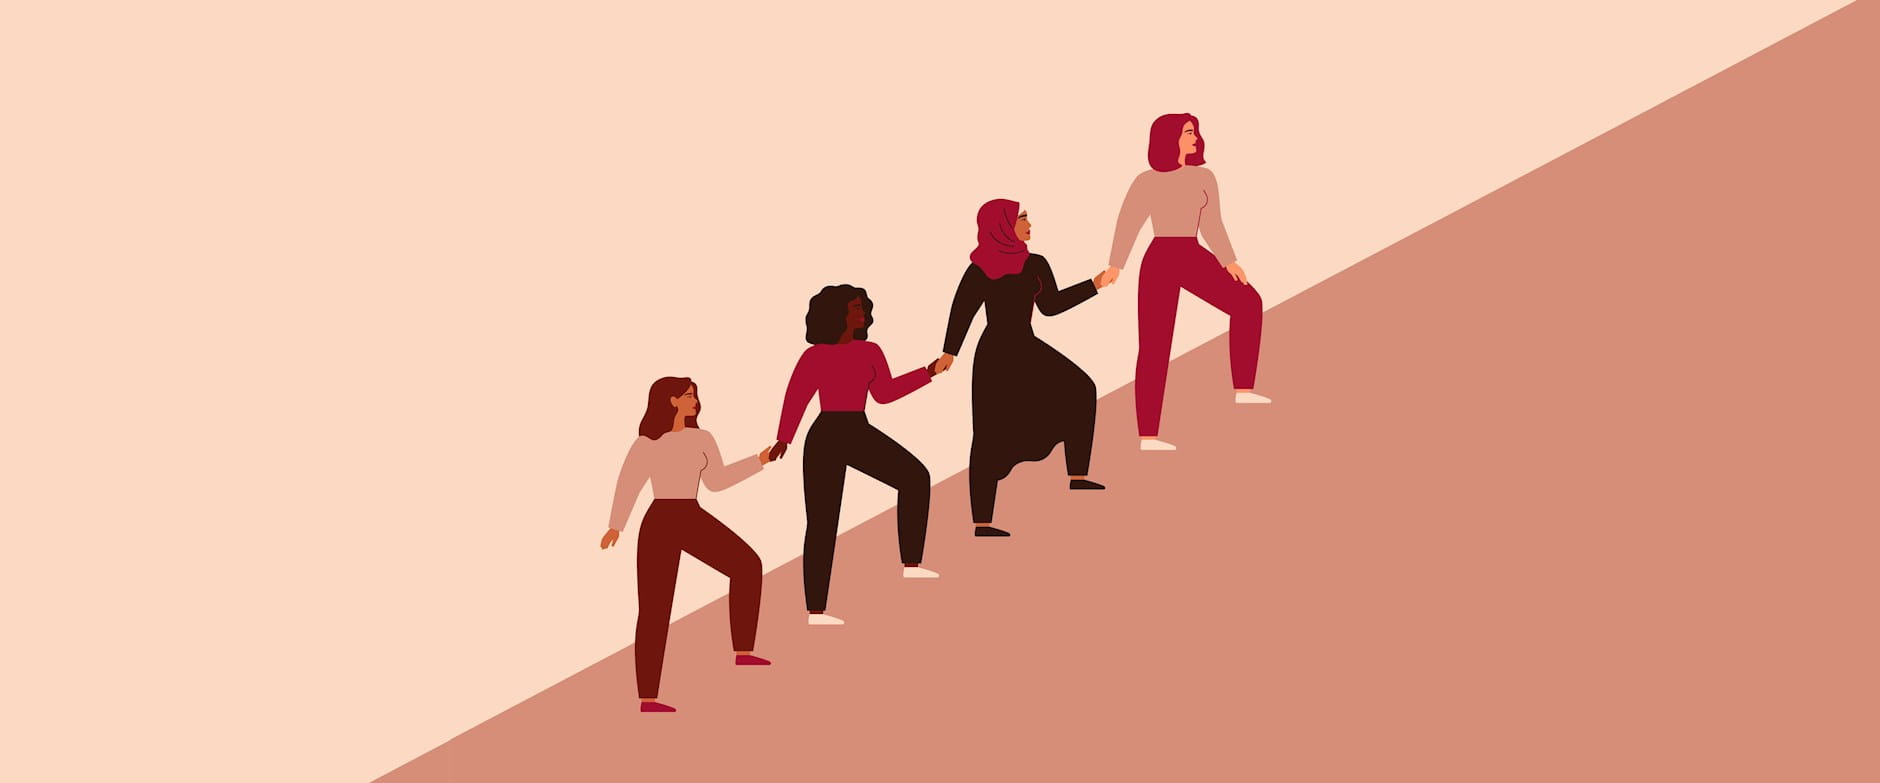 Illustration of 4 women holding hands climbing a hill